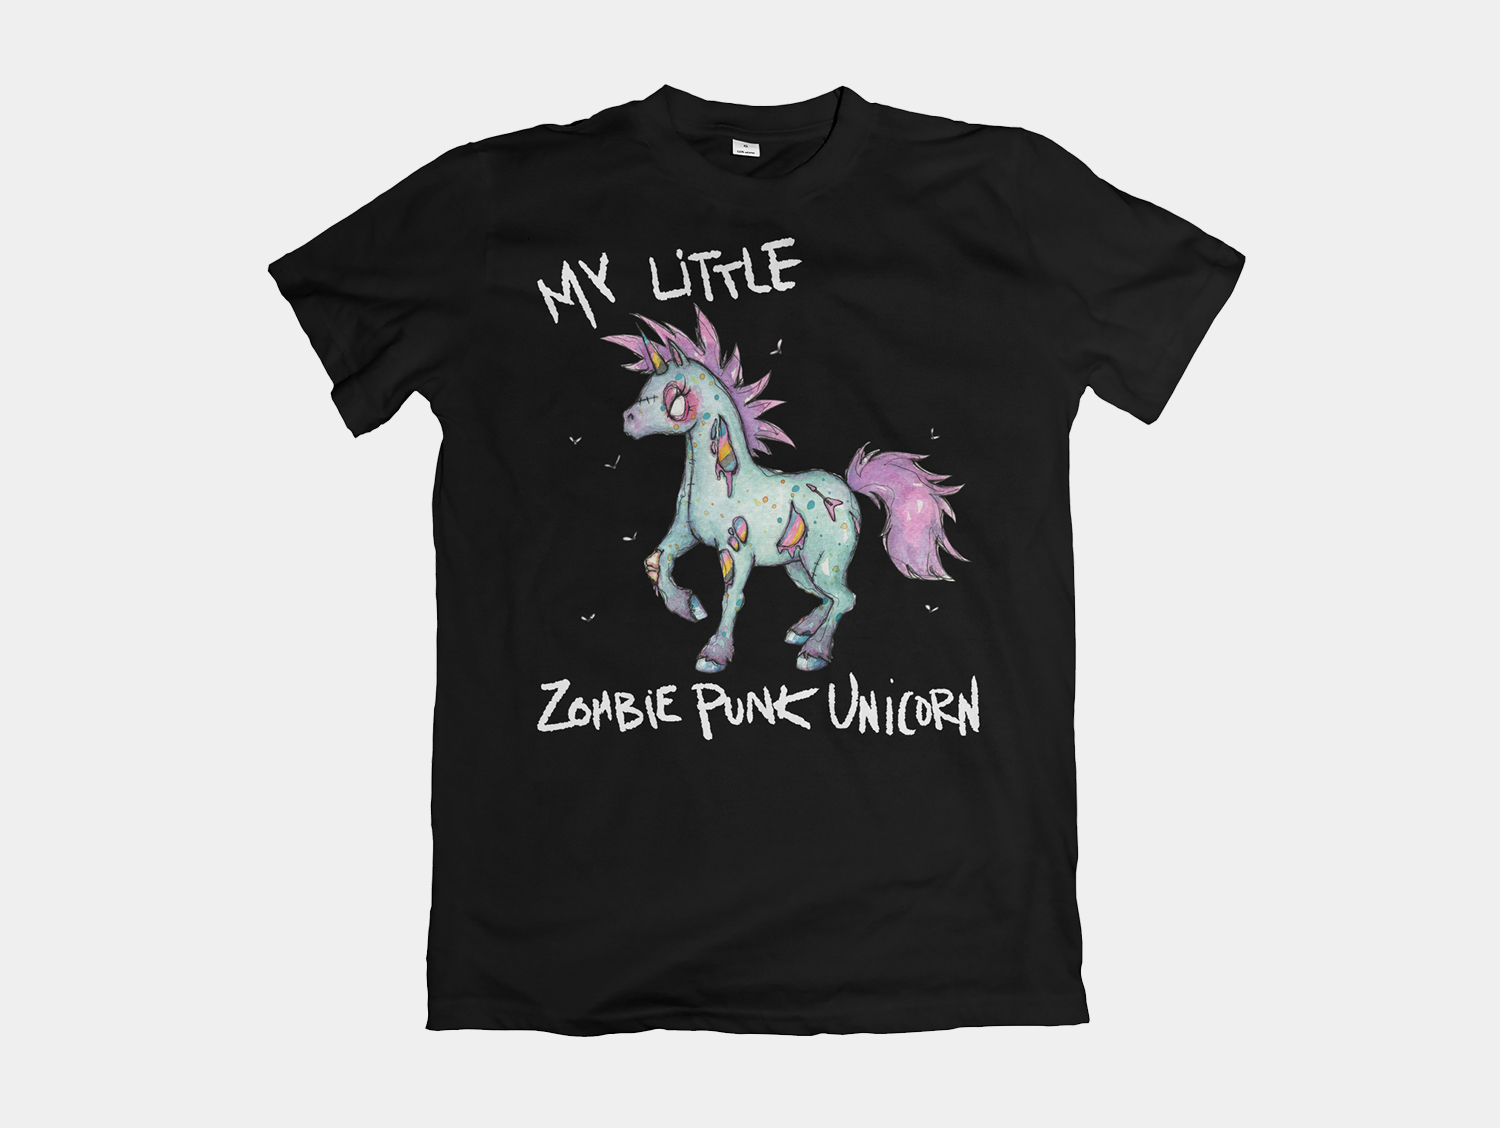 The Zombi Unicorn